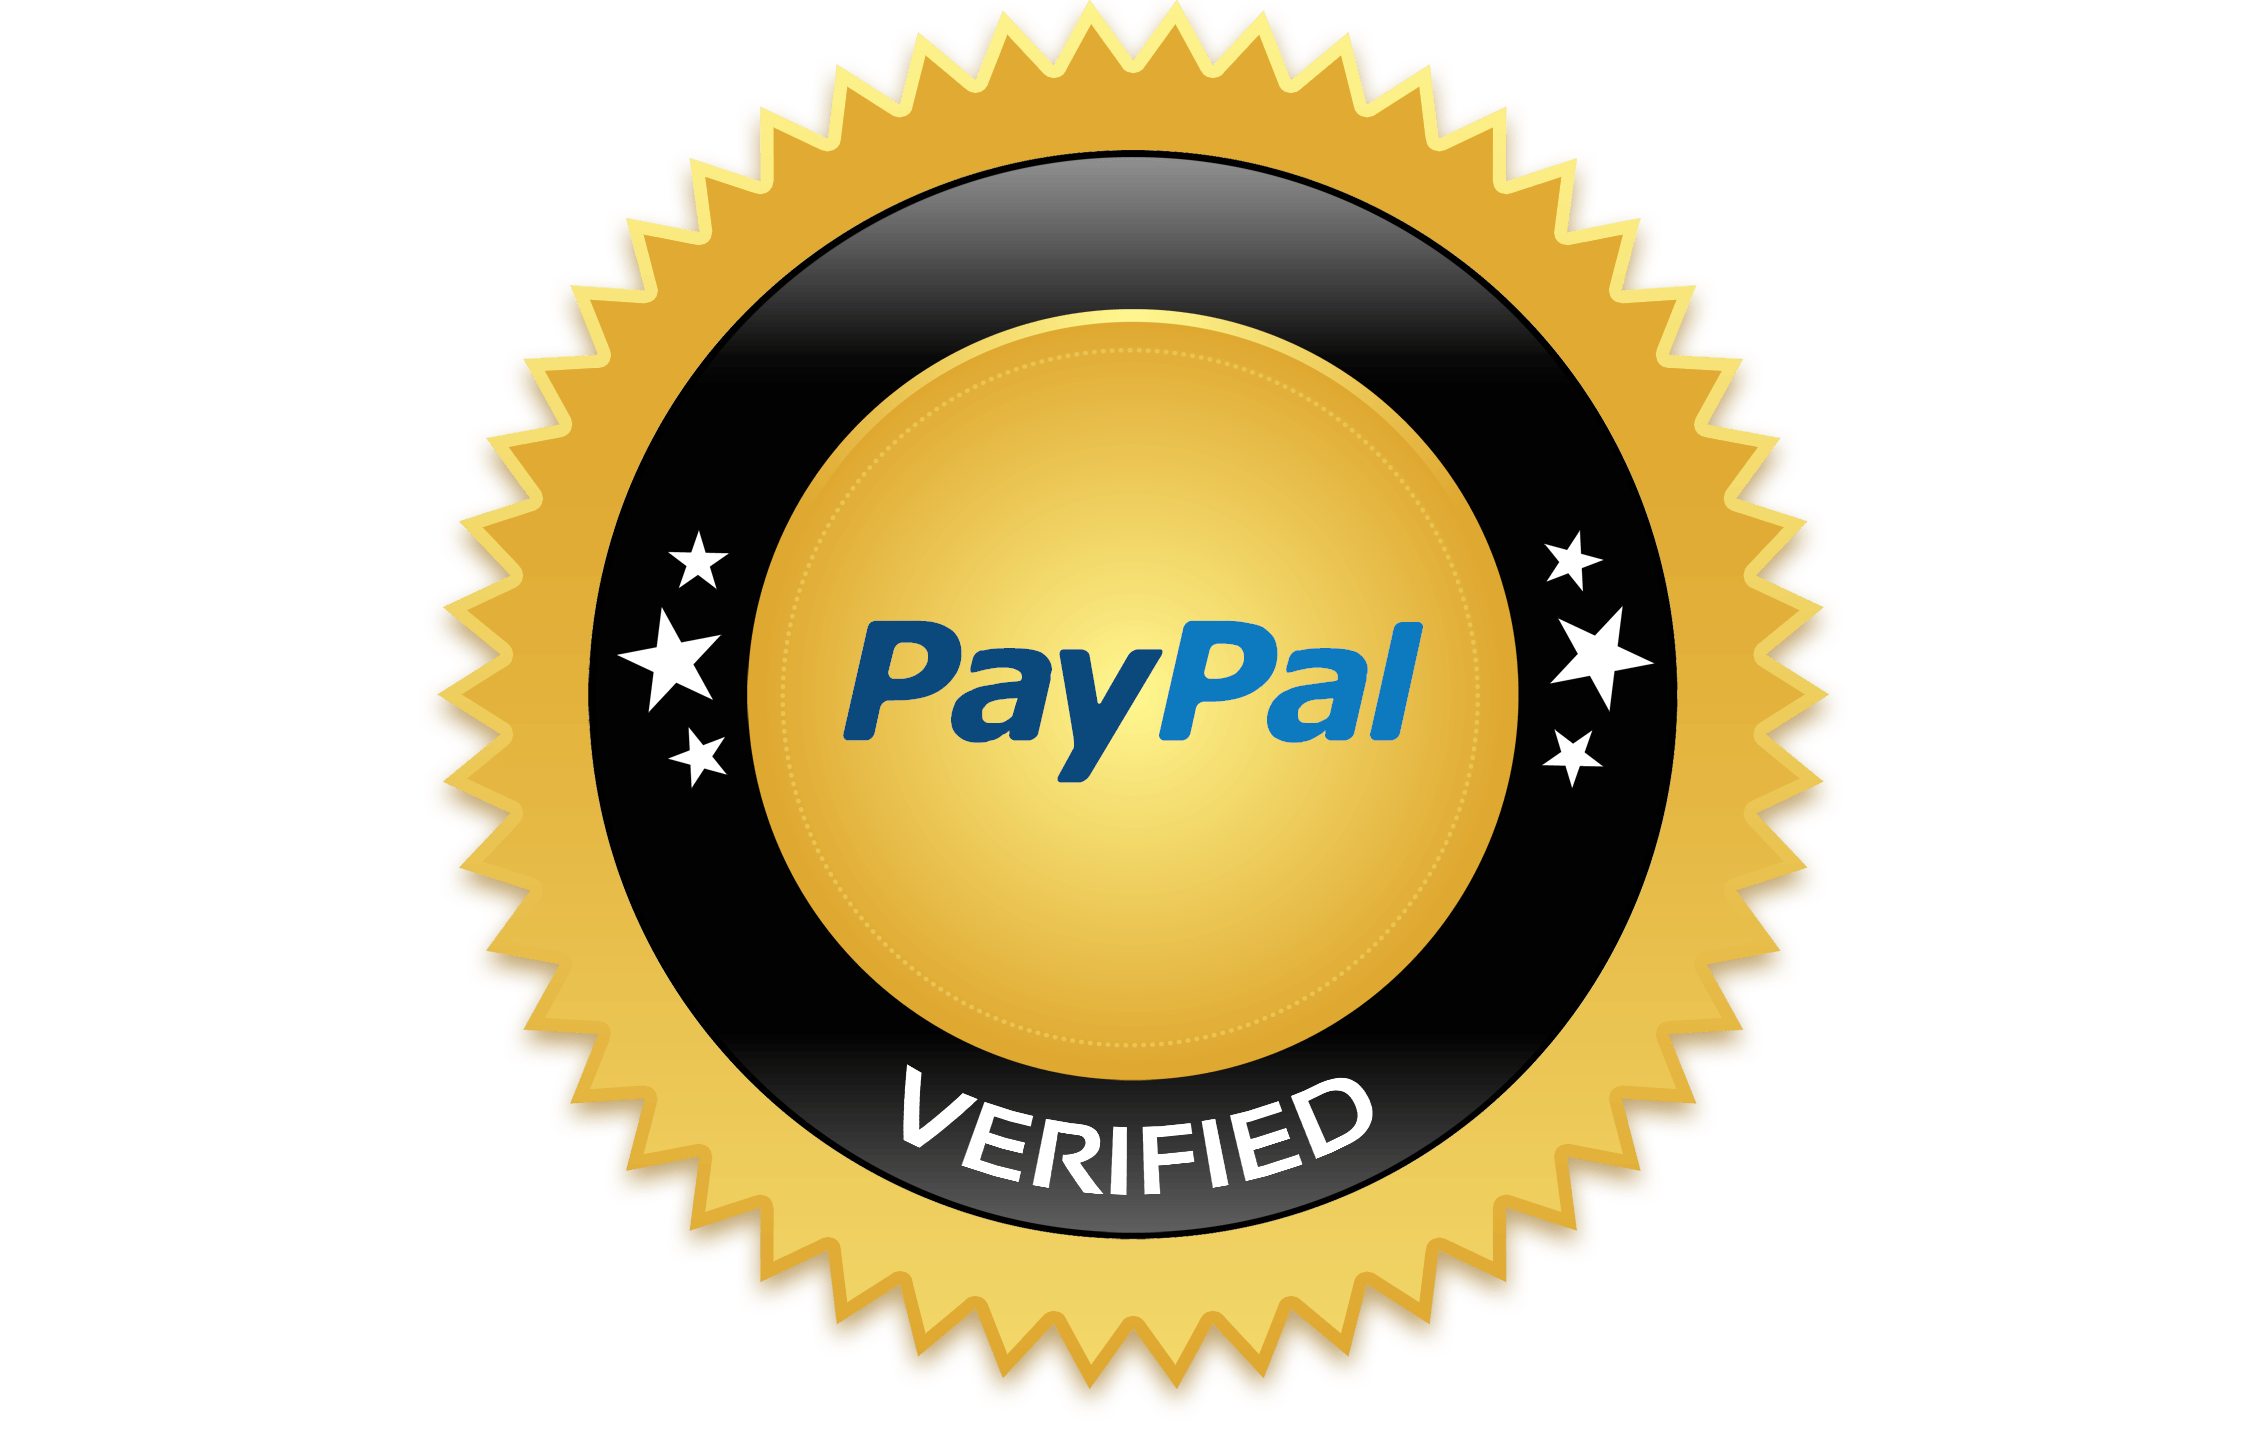 PayPal Certified Logo - Paypal Verified Logo, Paypal Icon, Symbols, Emblem Png - Free ...